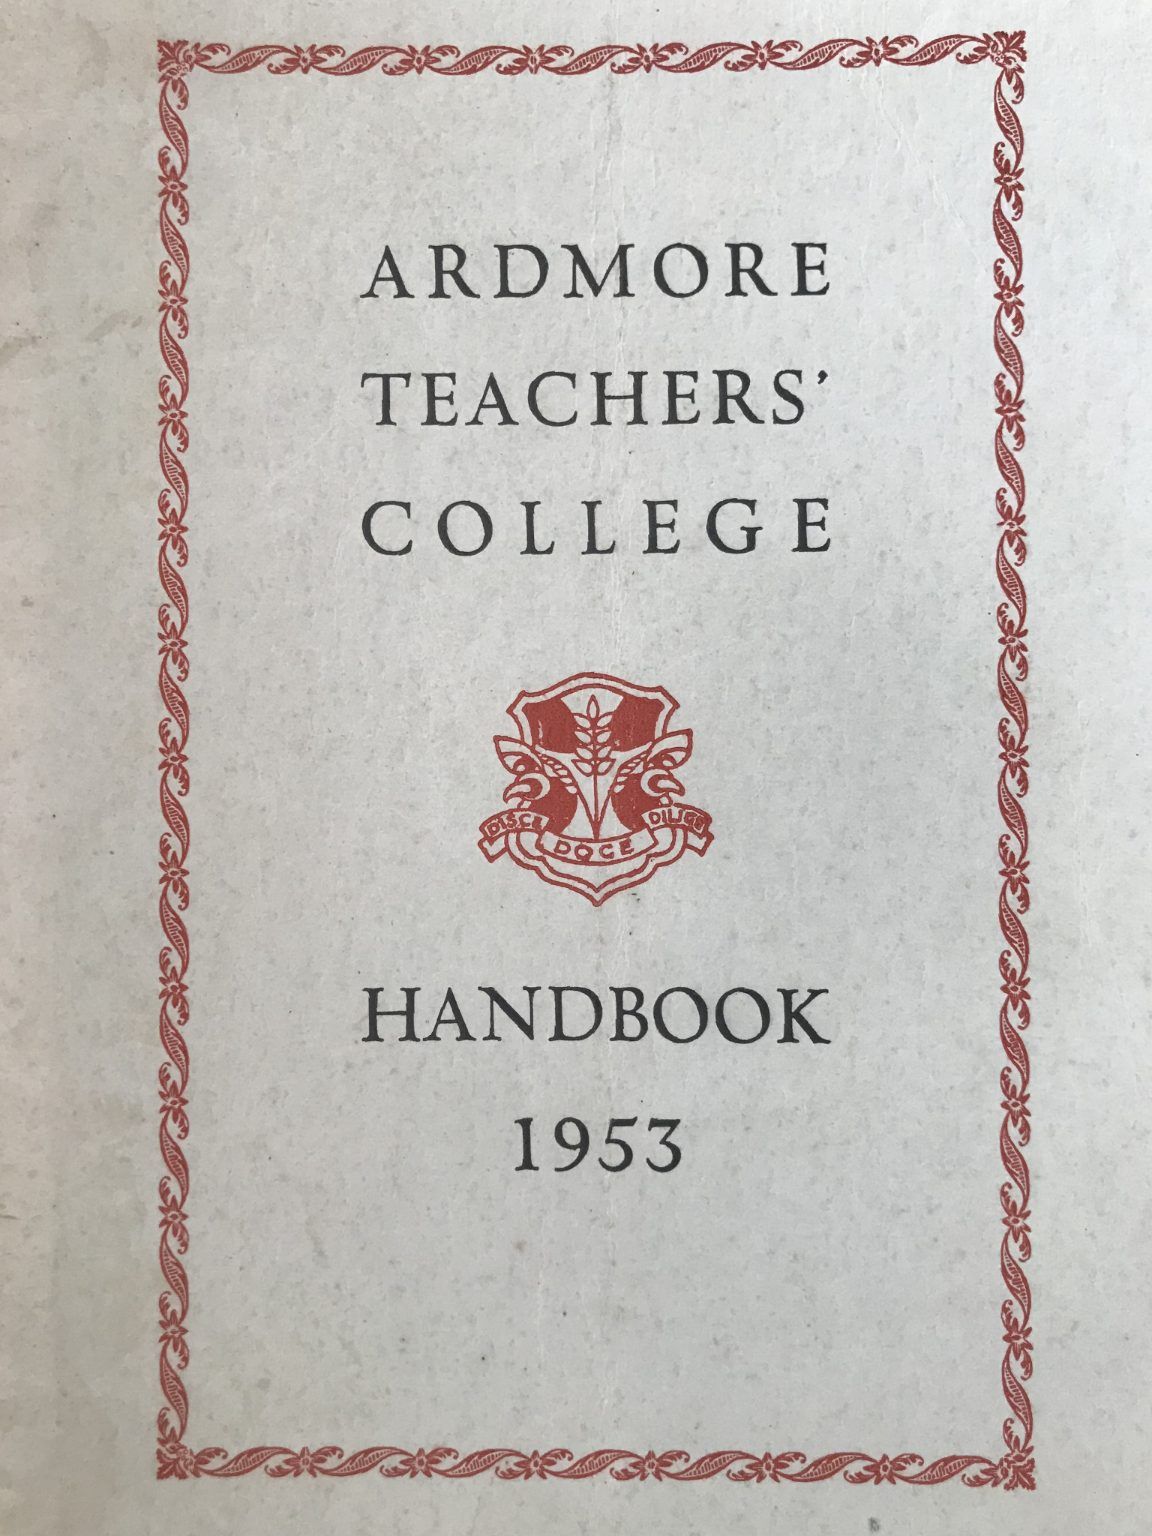 ARDMORE TEACHERS COLLEGE: Handbook 1953